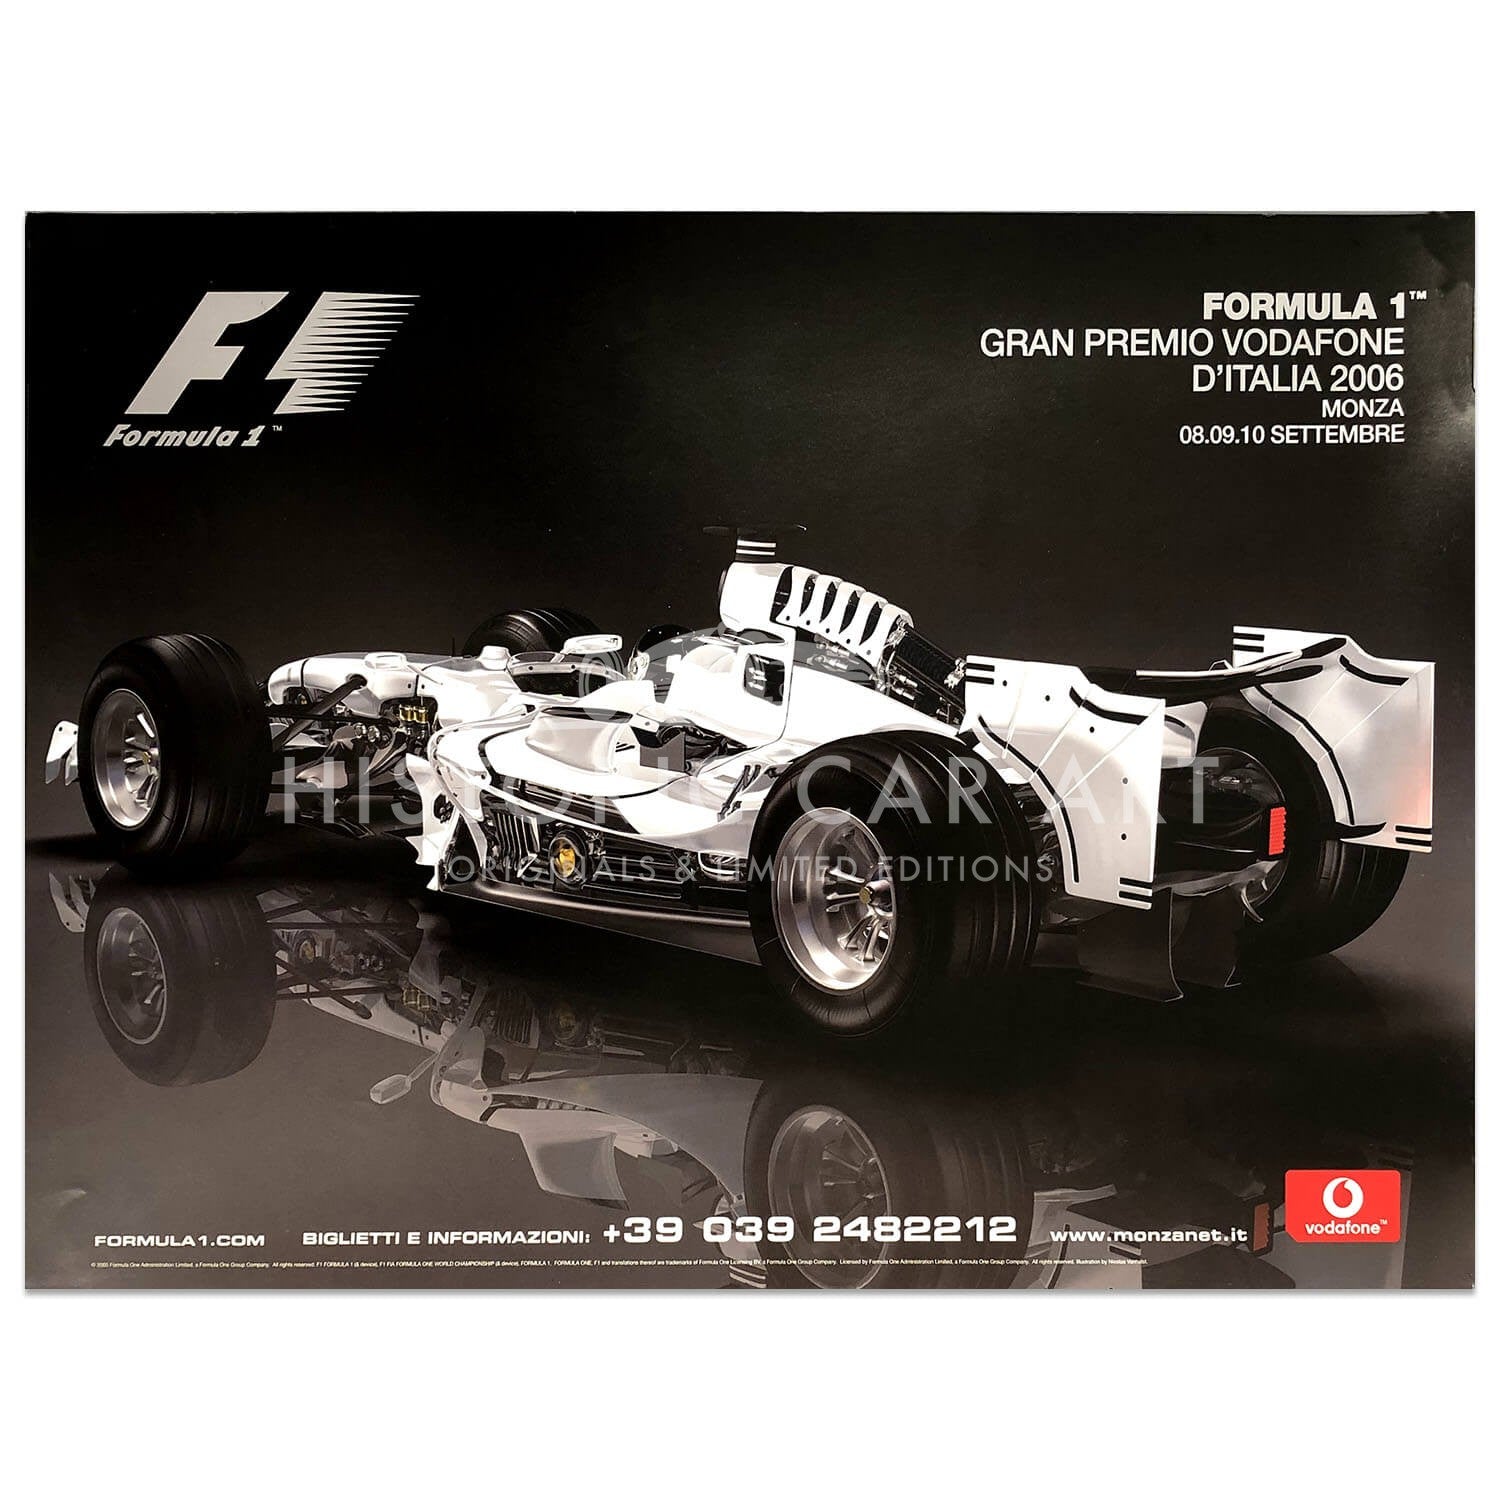 Italian | Grand Prix 2006 | Original Poster